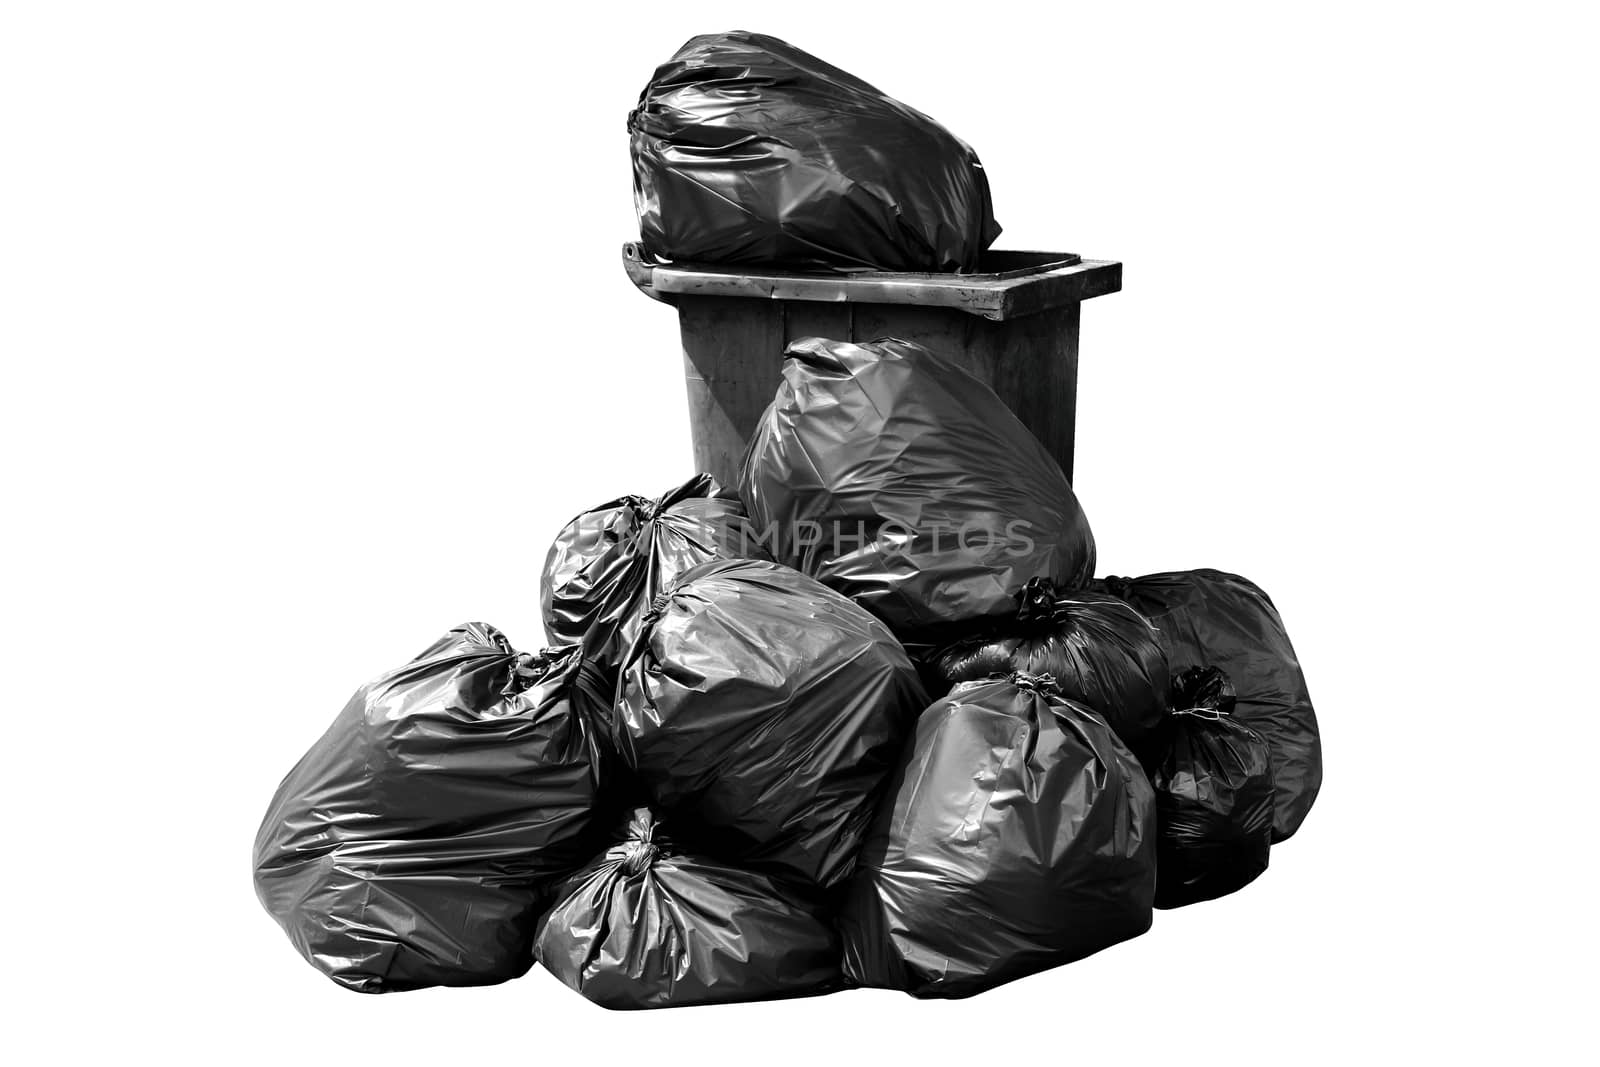 Bin,Trash, Garbage, Rubbish, Plastic Bags pile, bin bag garbage dark black isolated on background white by cgdeaw